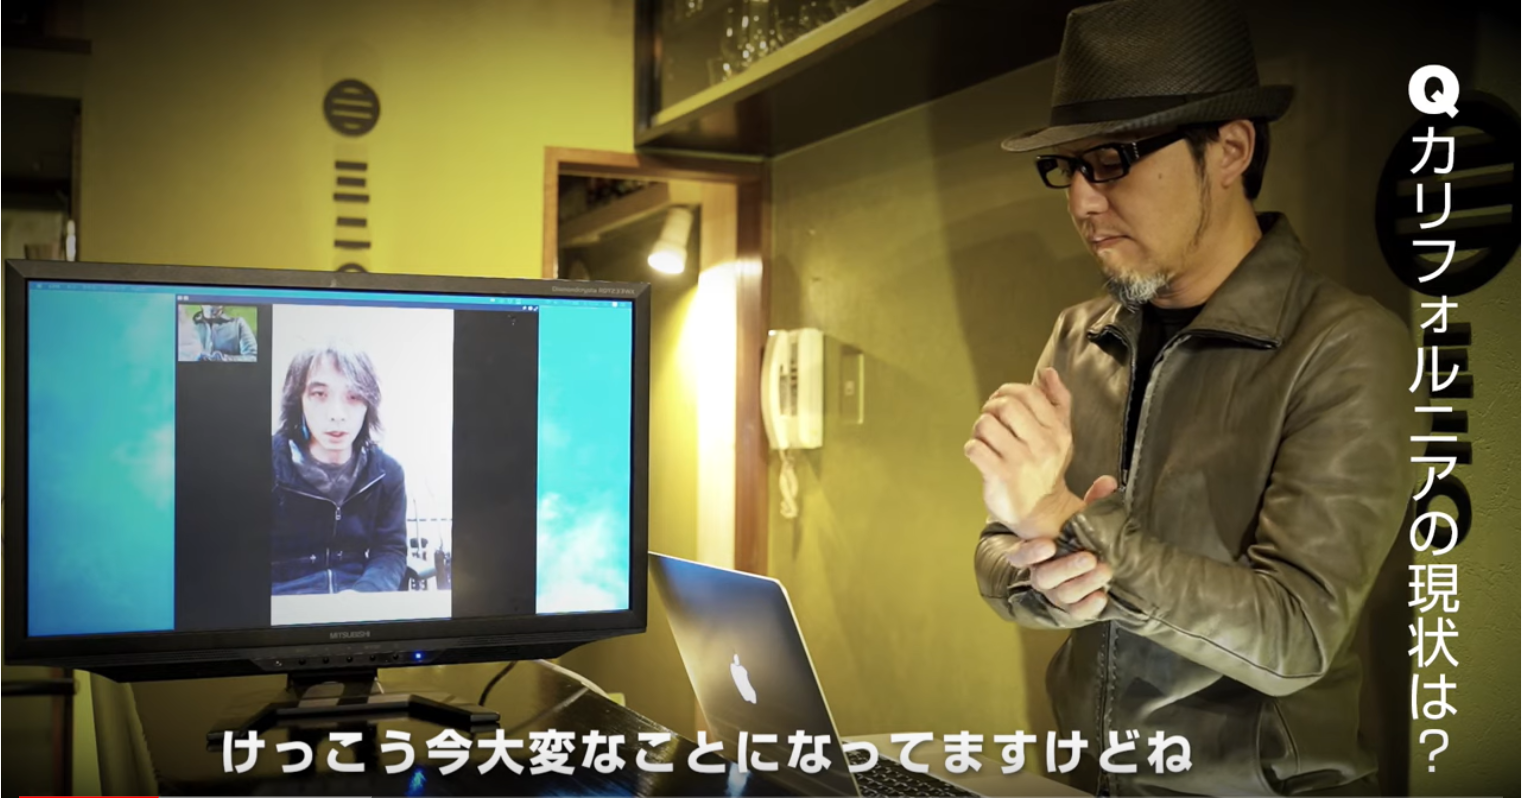 Yukihide "YT" Takiyamaが320 designのインタビューに答える動画